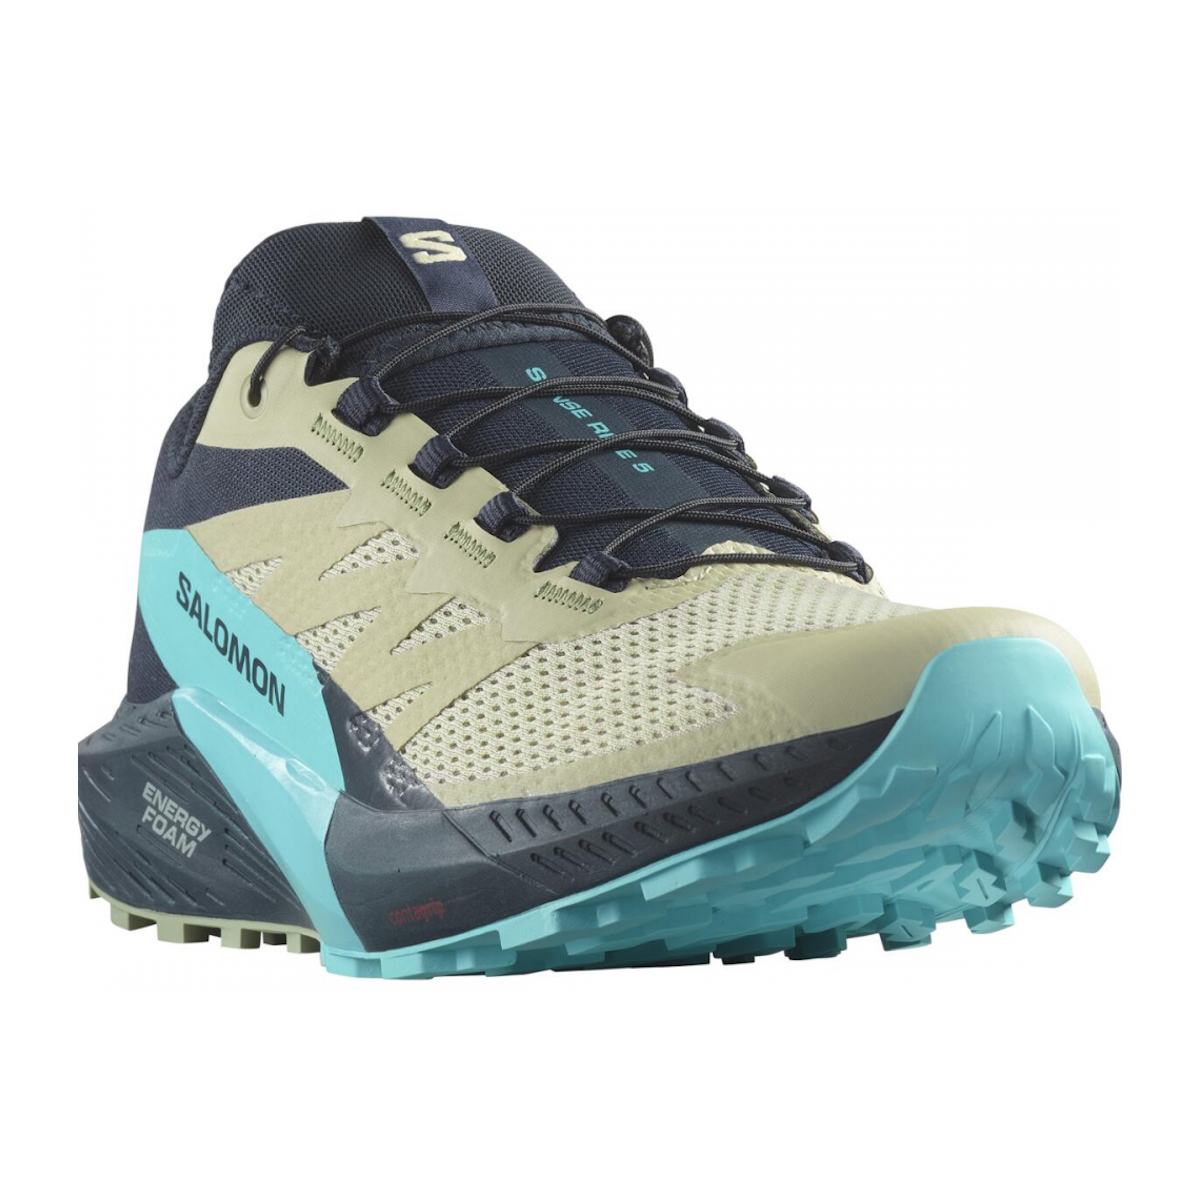 SALOMON SENSE RIDE 5 trail running shoes - grey/blue/black